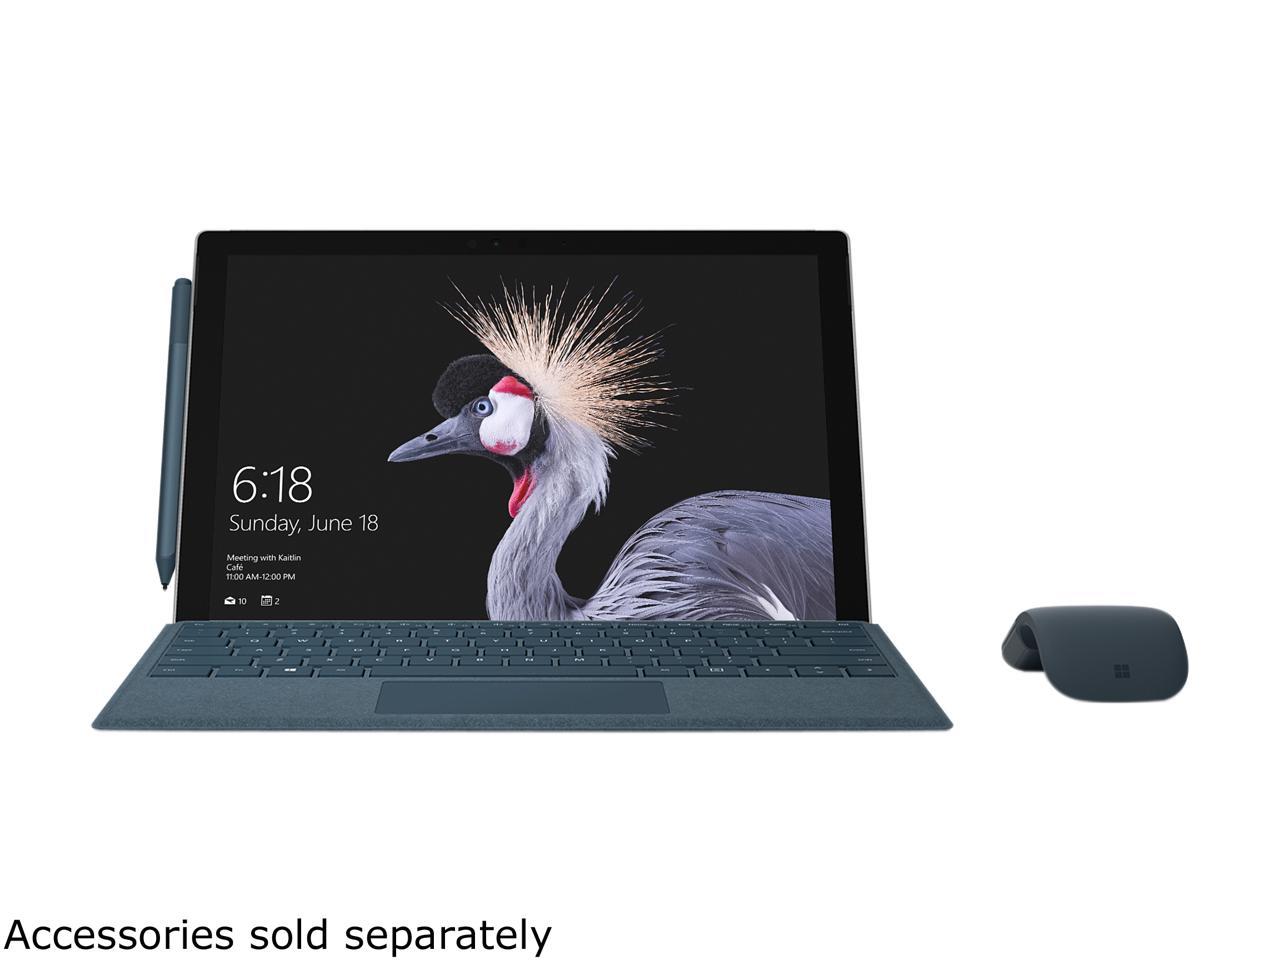 FJZ-00010 Microsoft New Surface Pro intel i7core/8G/256GB 12.3" No pen 